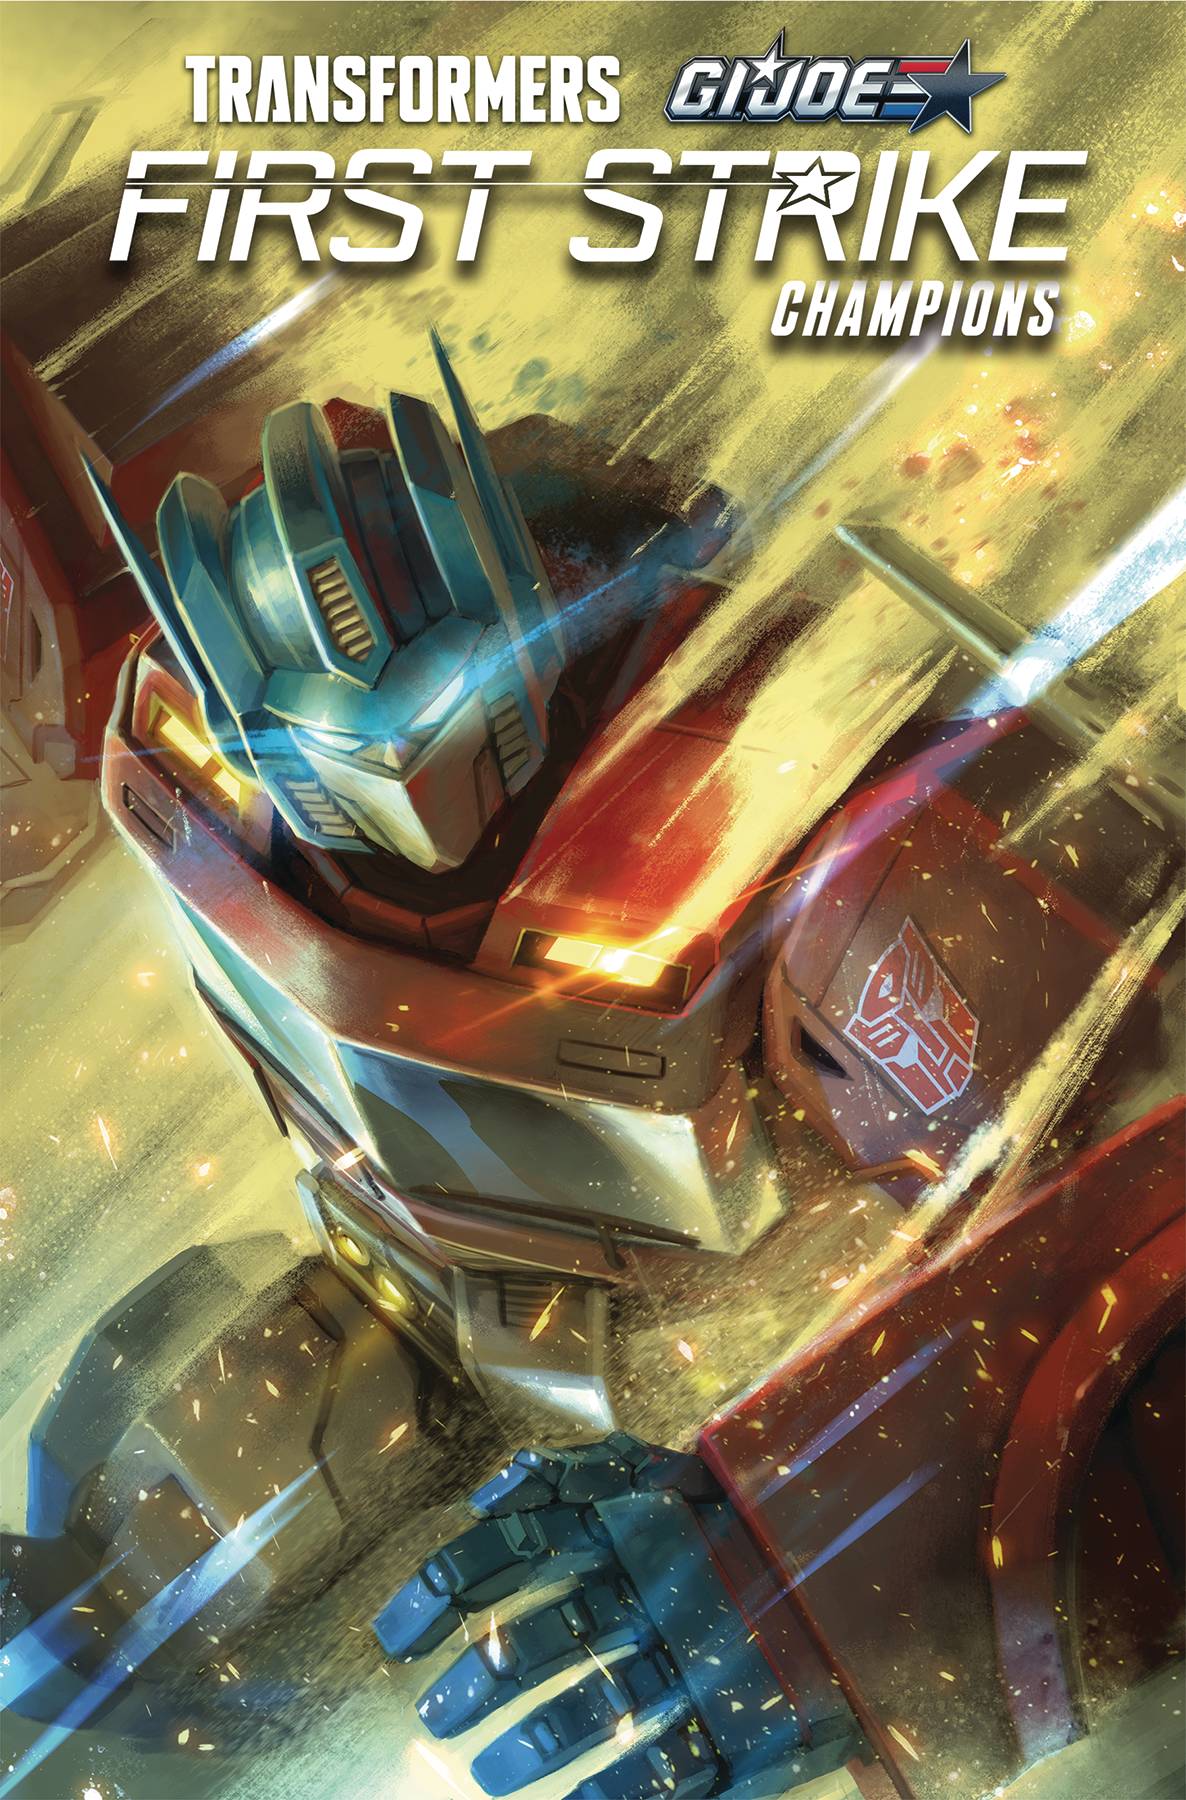 Transformers GI Joe First Strike Champions Graphic Novel